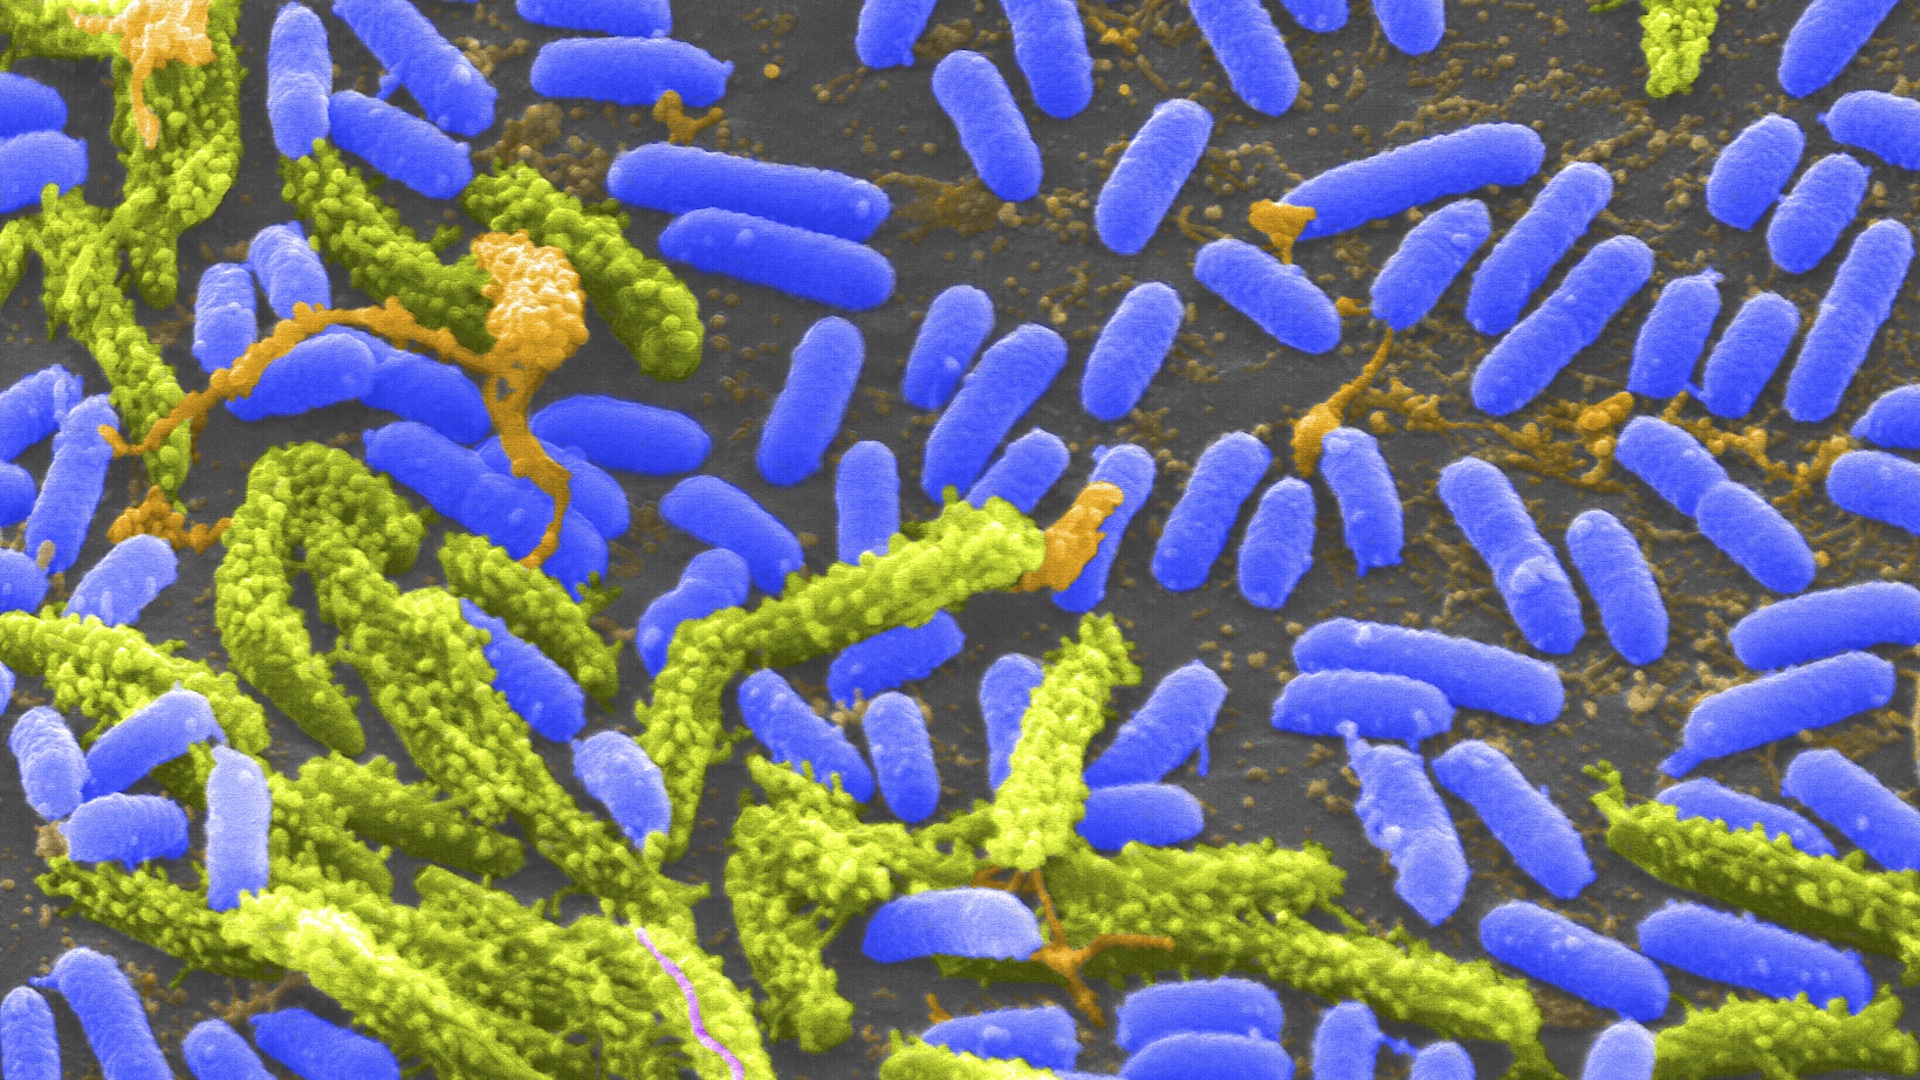 A microscope image of rod-shaped Vibrio bacteria